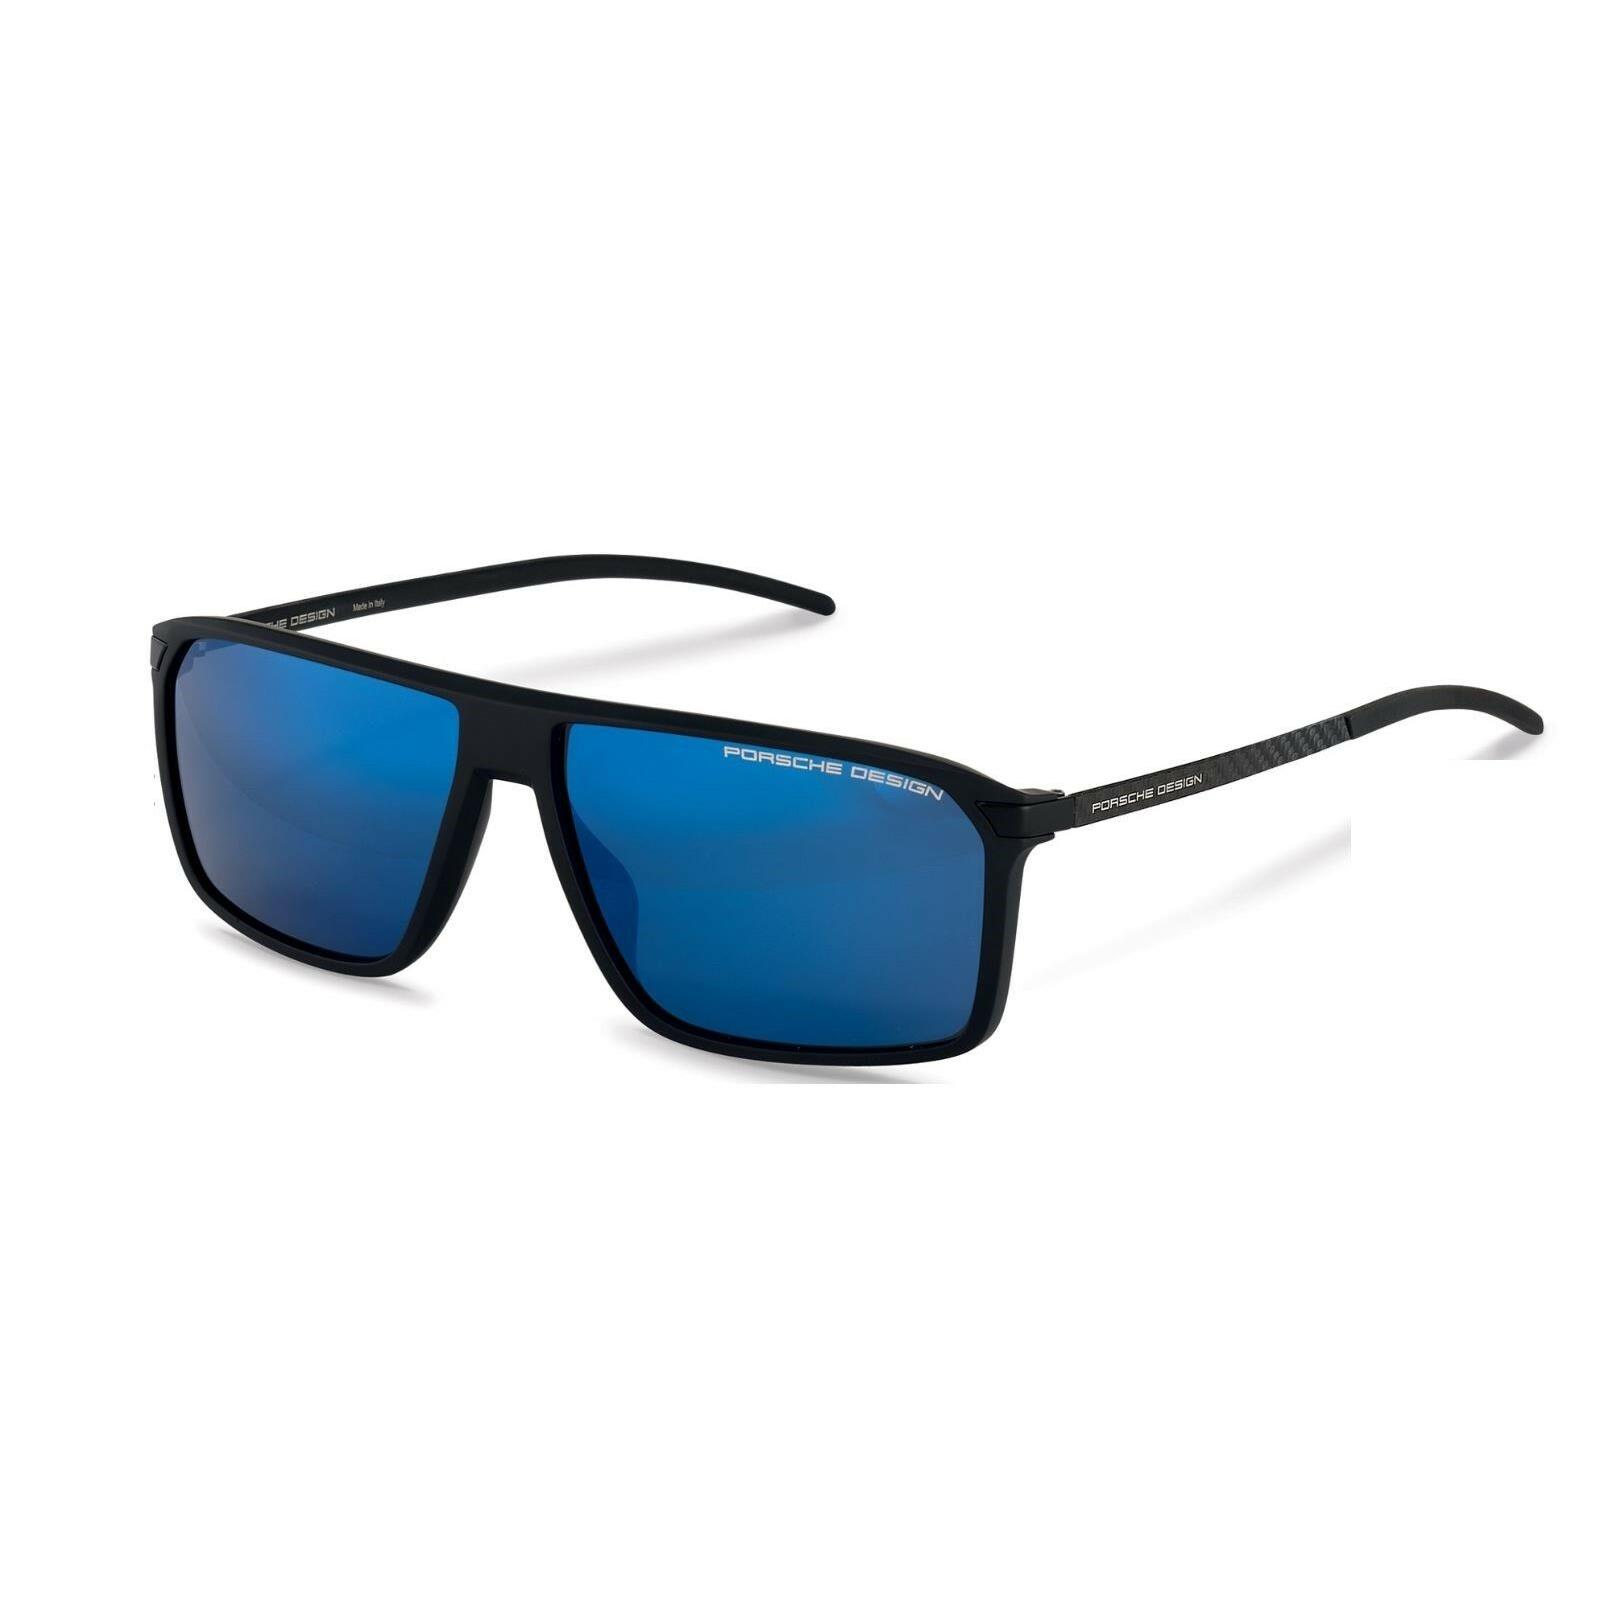 Porsche Design P 8653 A Black Sunglasses